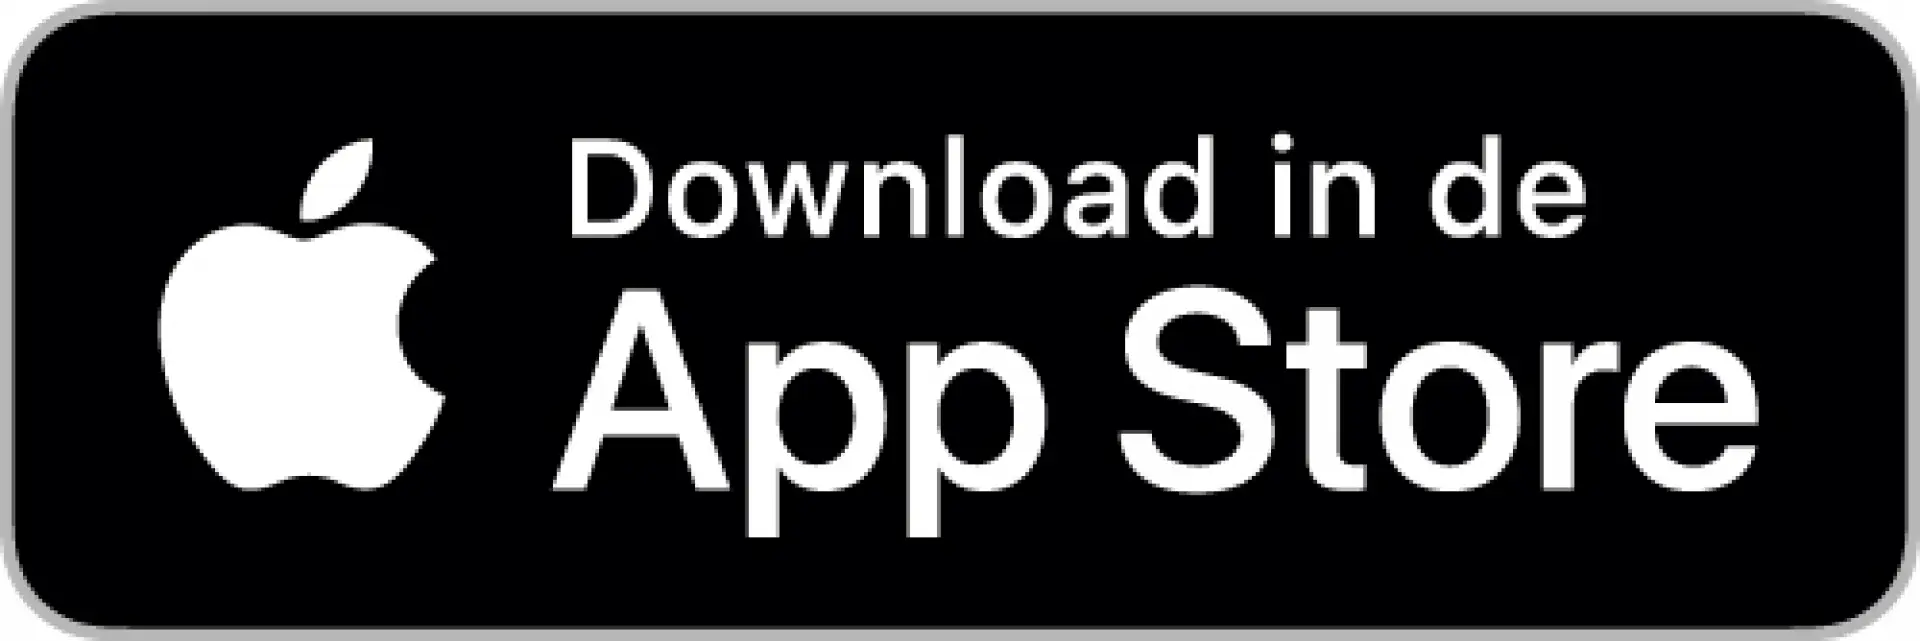 Apple app store download button